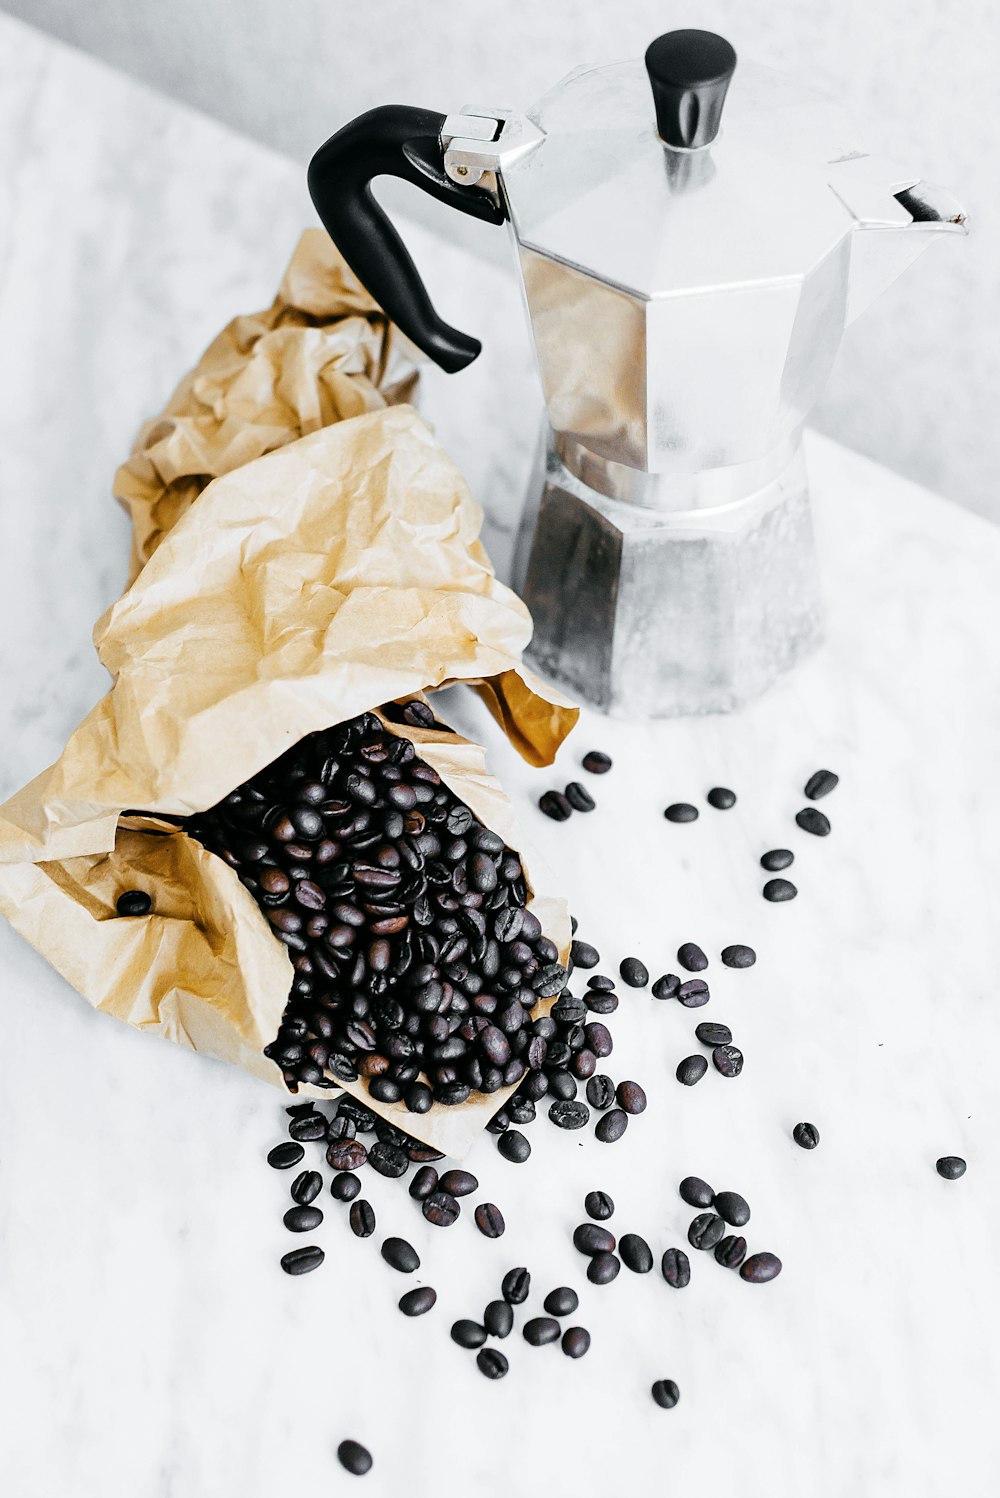 black coffee beans and gray mocha pot